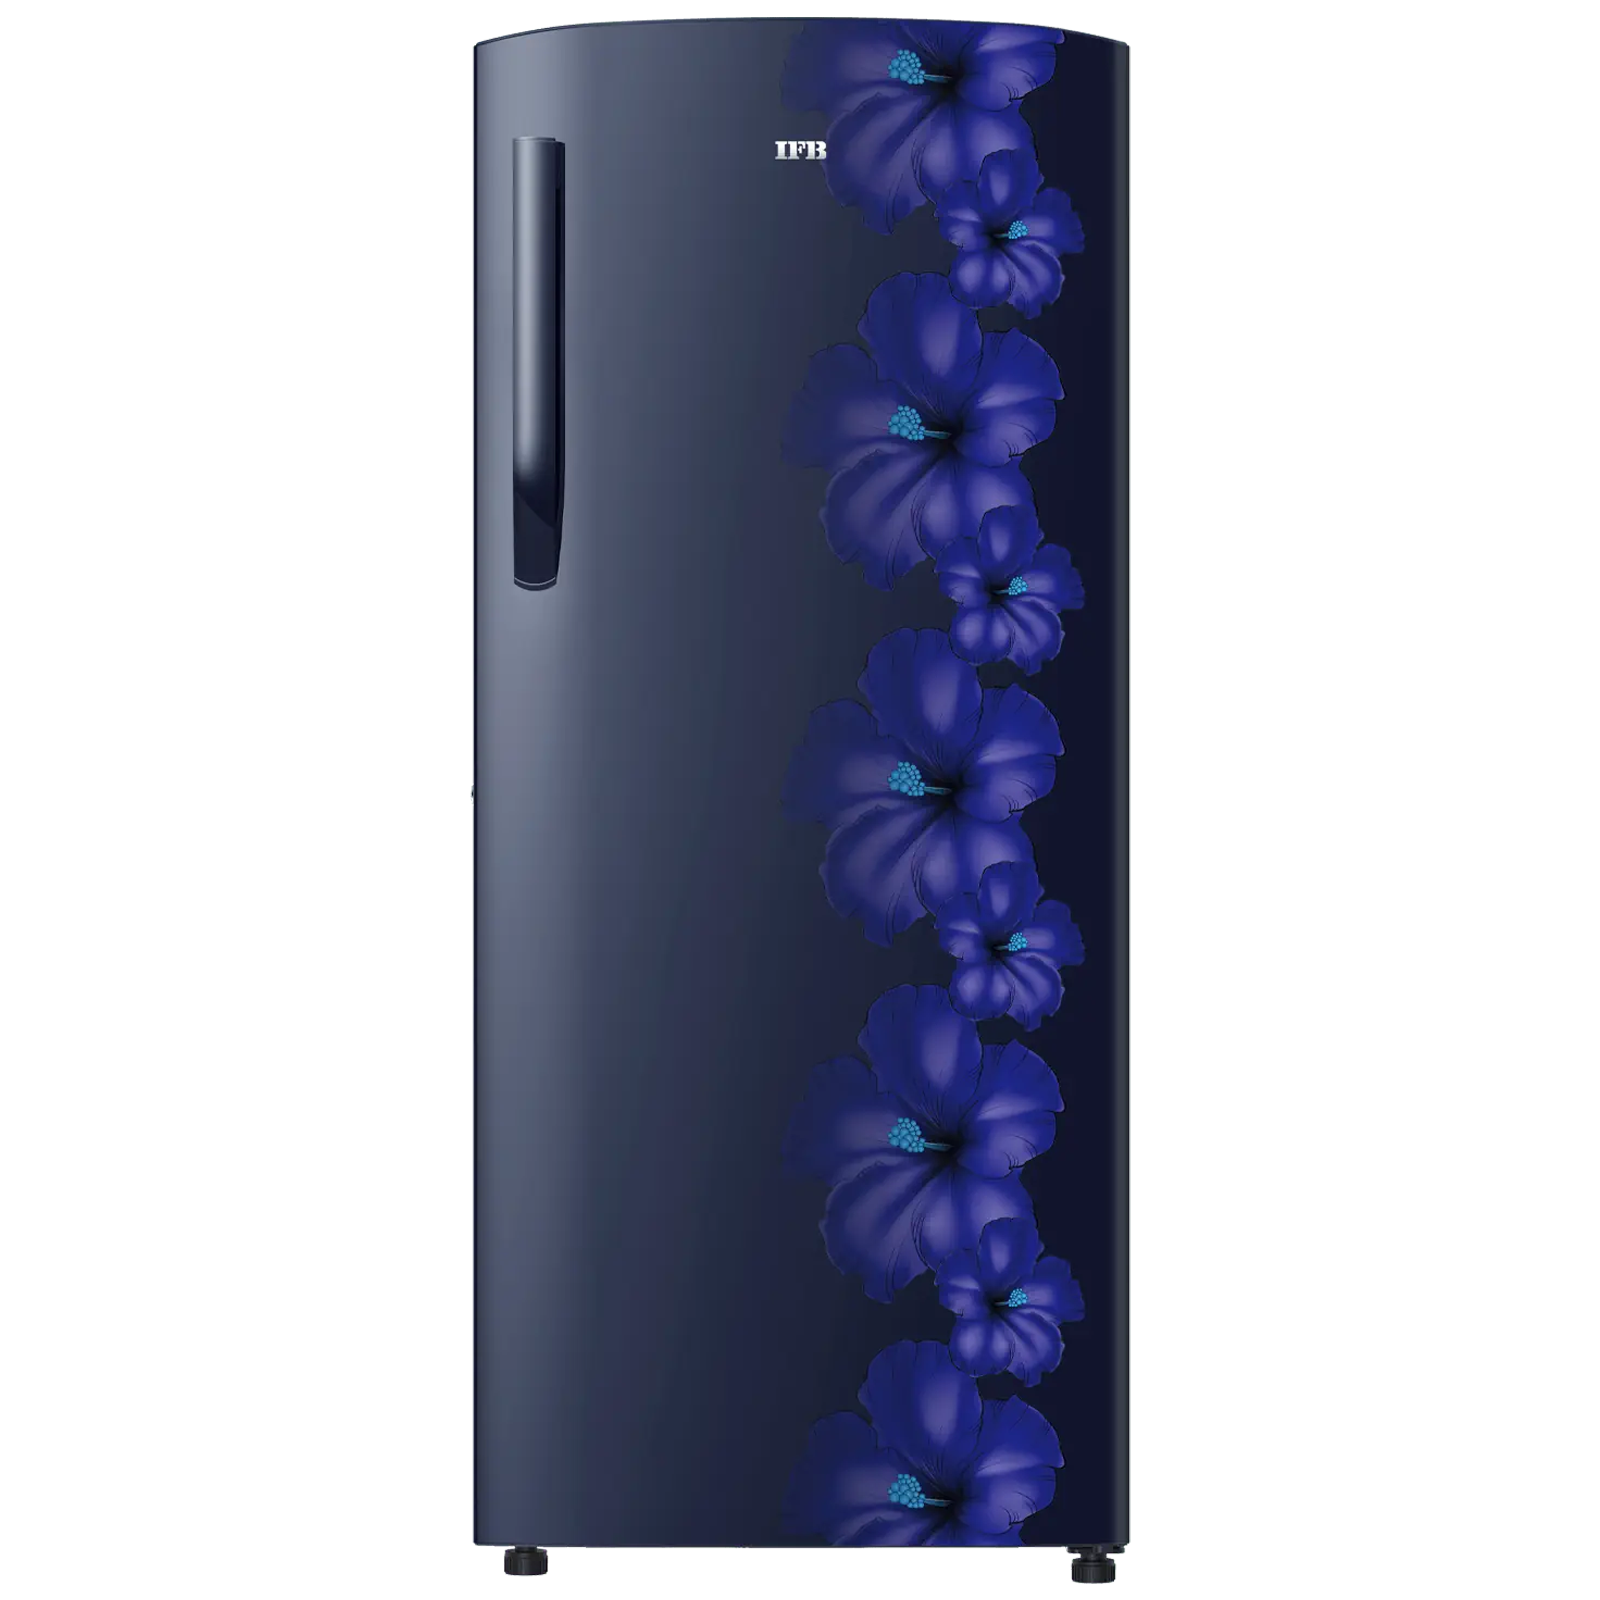 IFB Metal Cool 222 Litres 3 Star Direct Cool Single Door Refrigerator with Antibacterial Gasket (IFBDC2483FBH, Blue Flower)